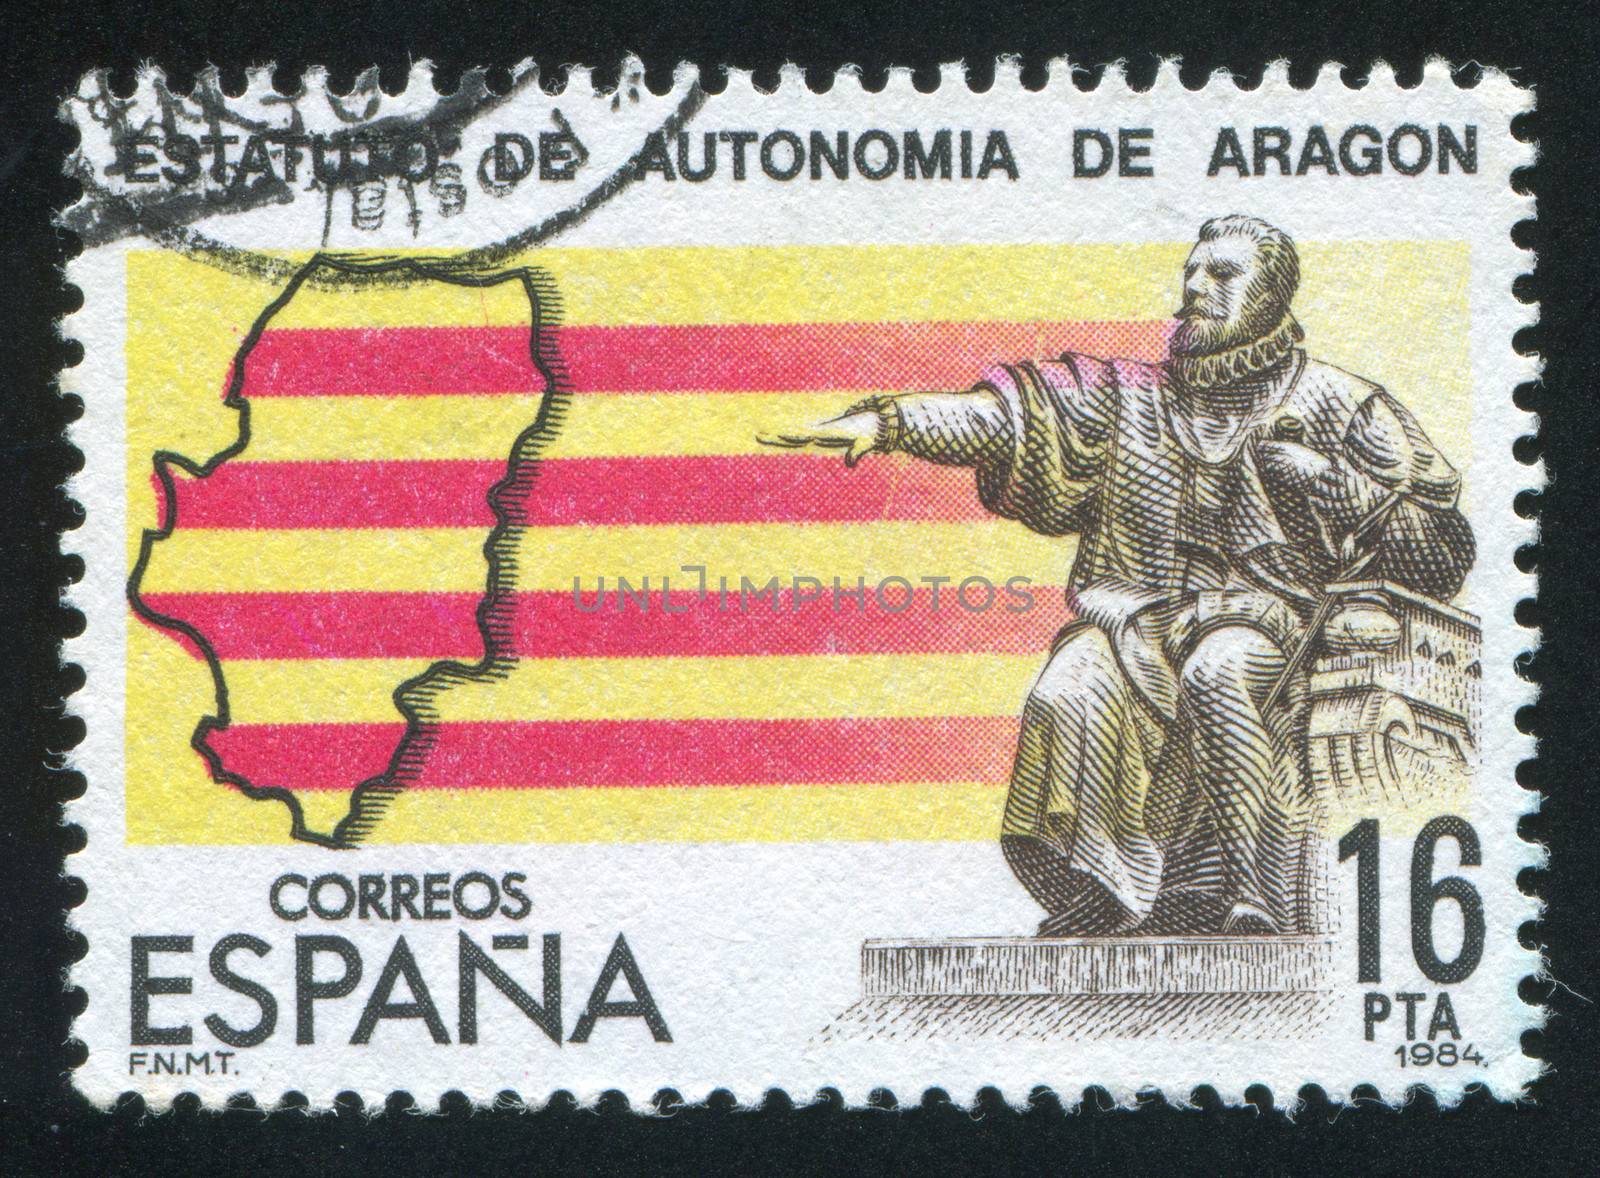 SPAIN - CIRCA 1984: stamp printed by Spain, shows Aragon Statute of Autonomy, circa 1984